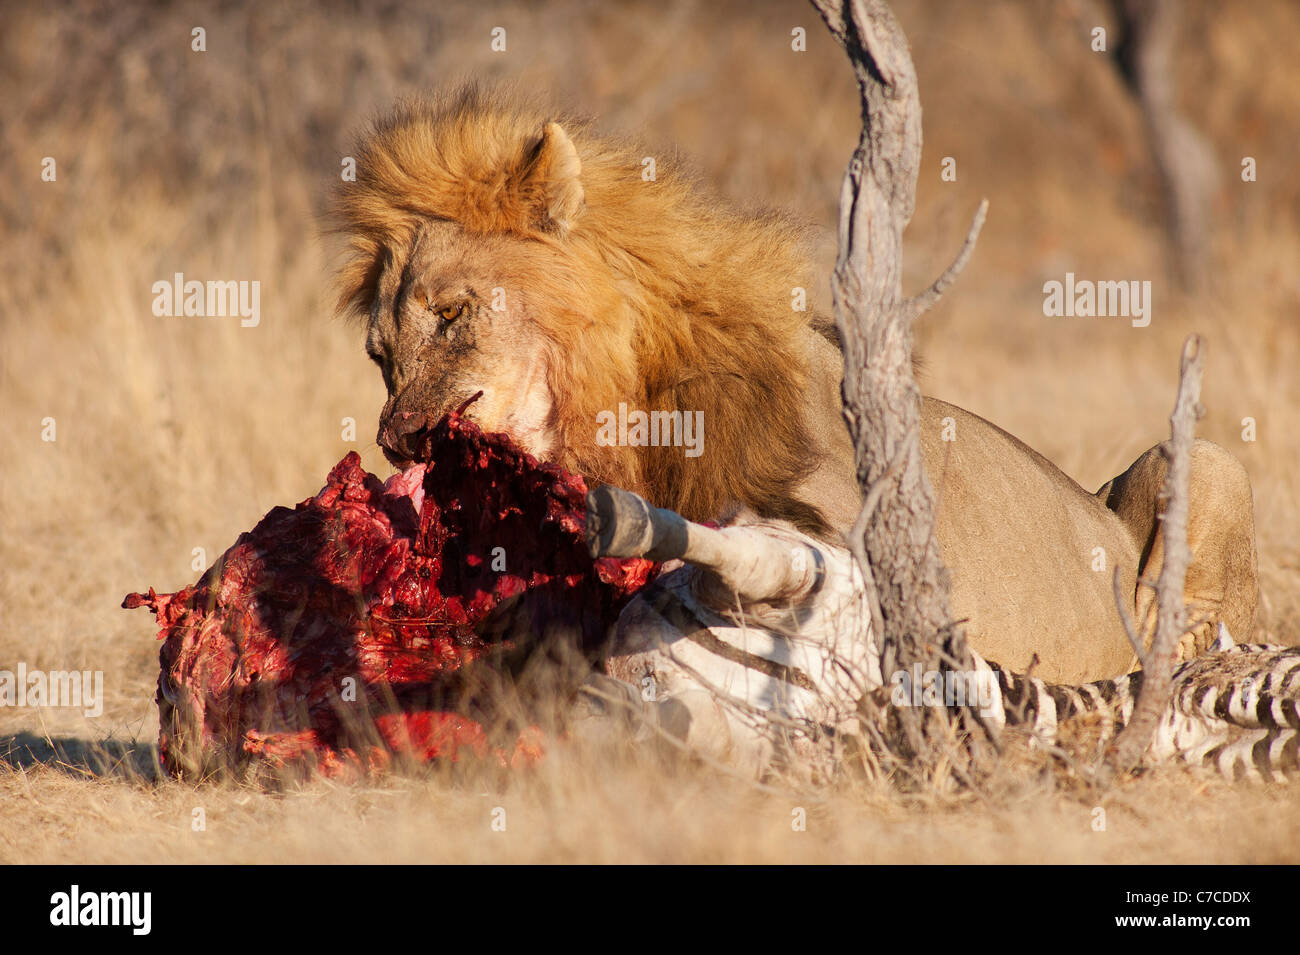 Gran león macho (Panthera leo) en una cebra matar, Parque Nacional Etosha, Namibia Foto de stock